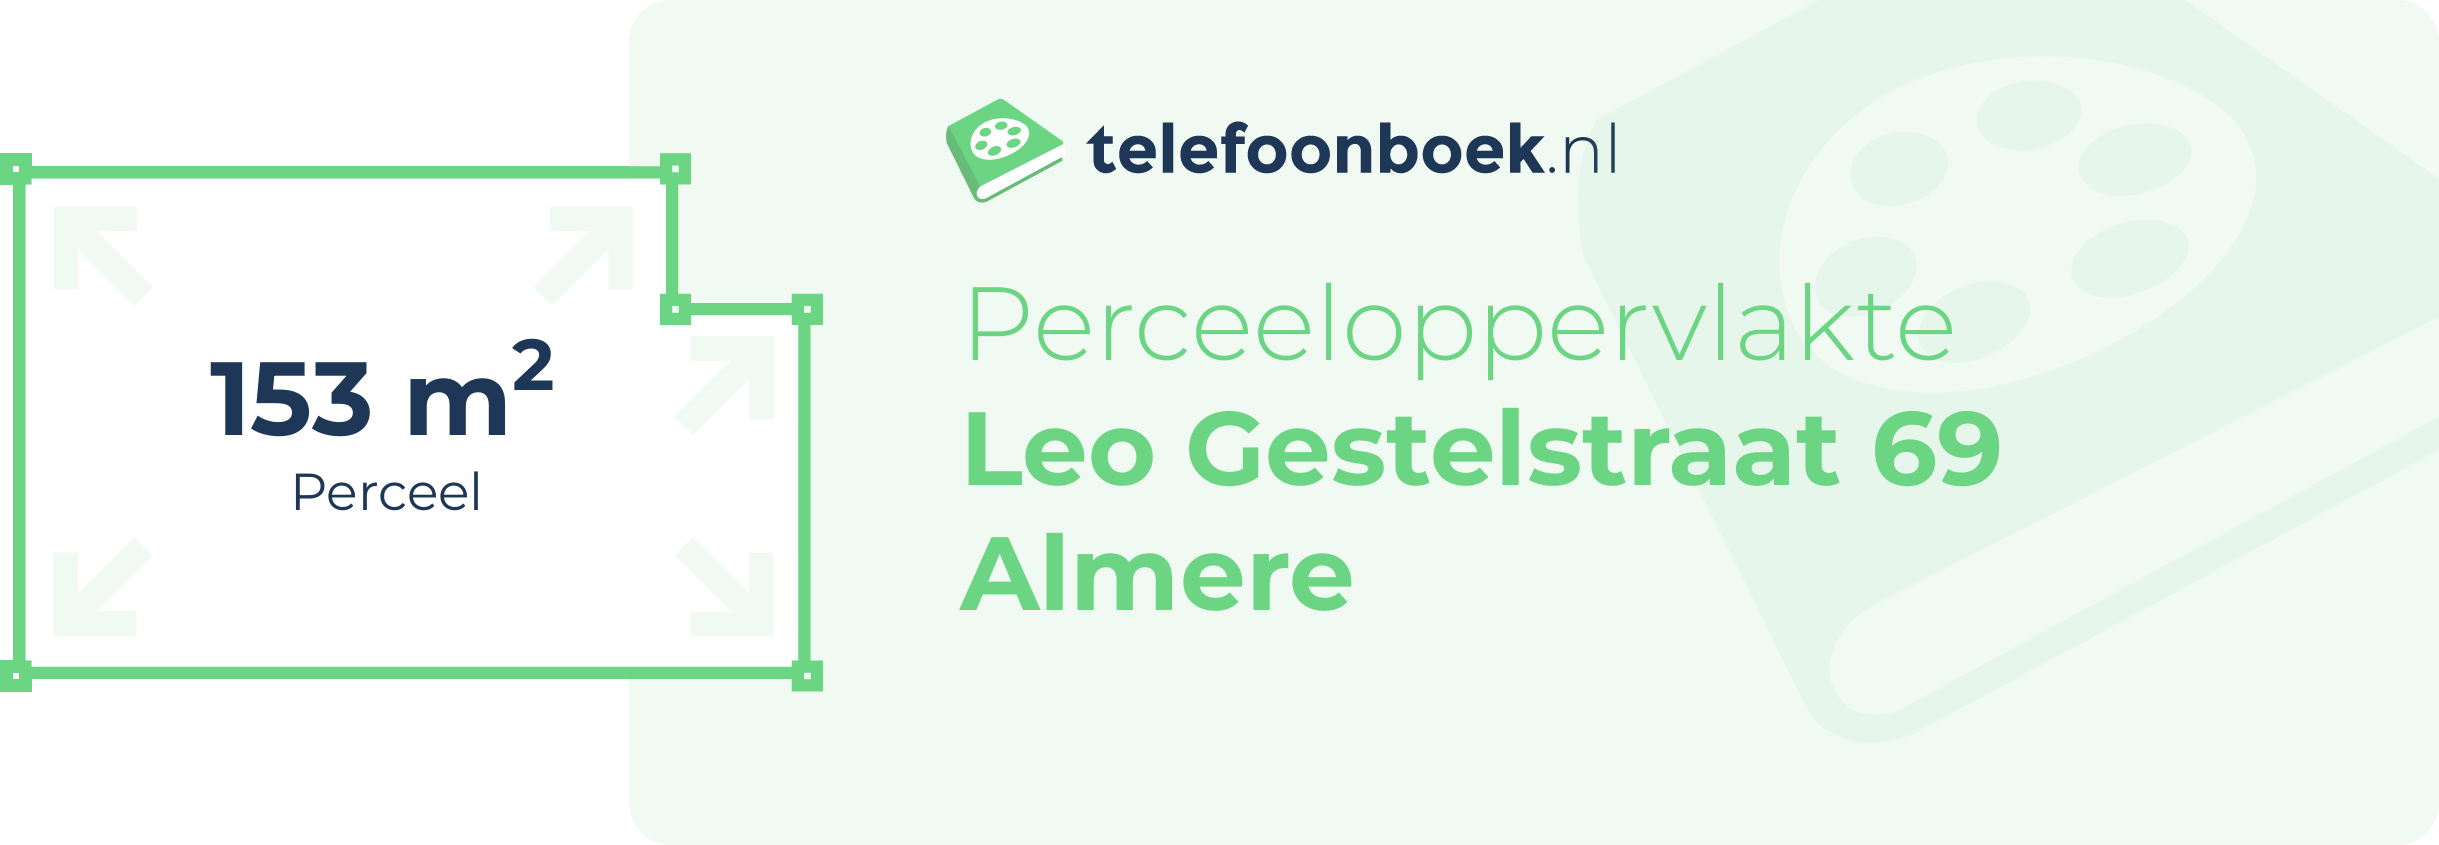 Perceeloppervlakte Leo Gestelstraat 69 Almere